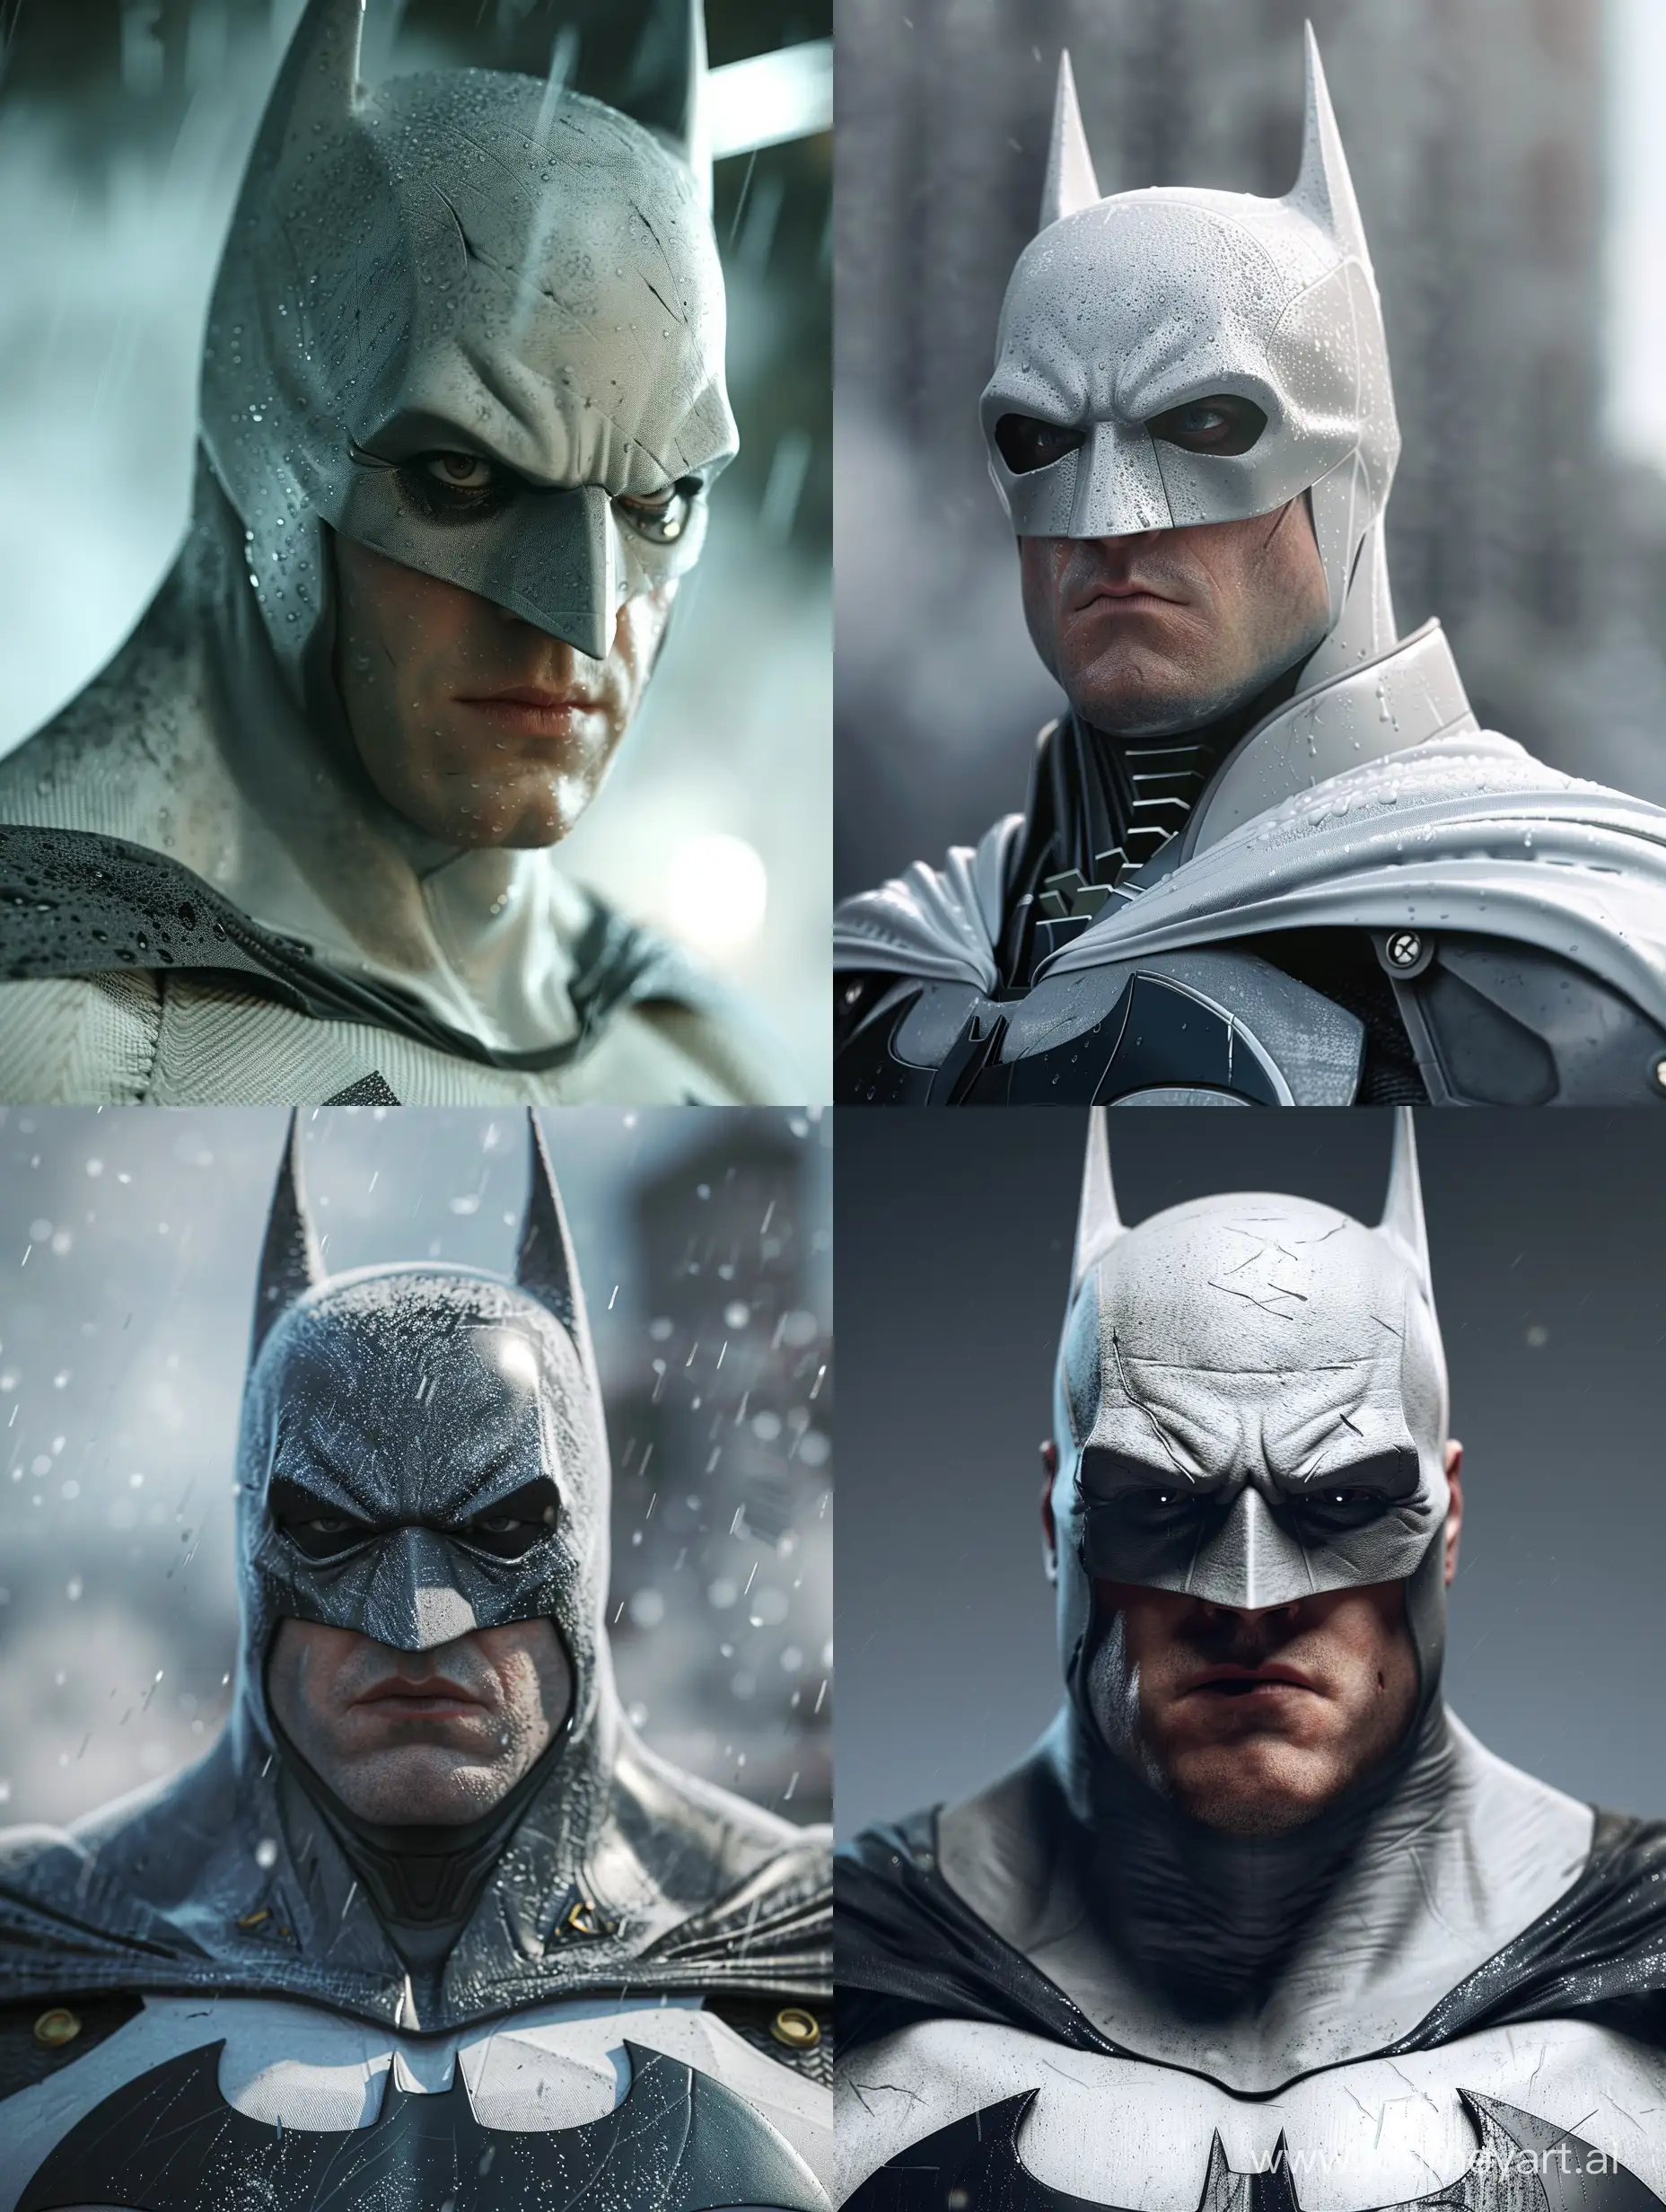 Christian-Bale-as-Batman-in-White-UltraRealistic-HighResolution-Cinematic-Lighting-Portrait